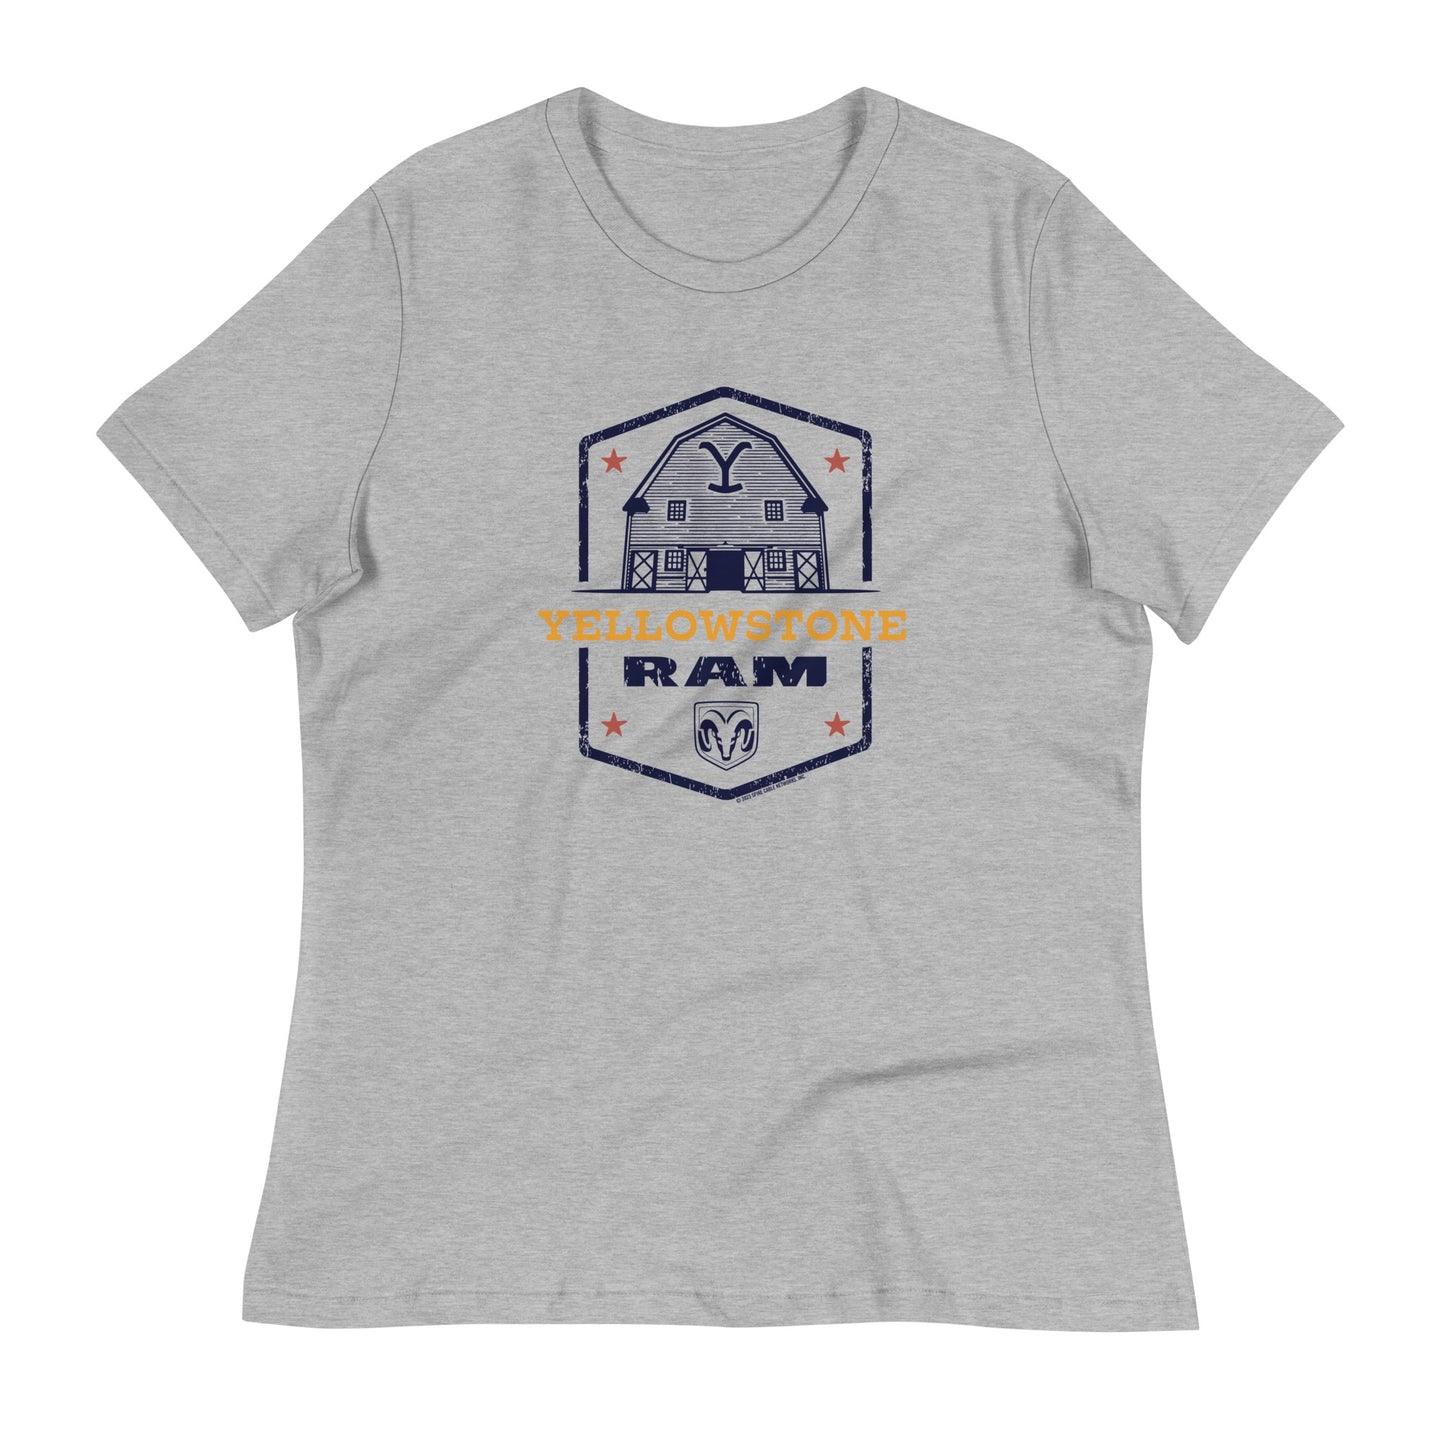 Yellowstone x Ram Barn Women's T-Shirt